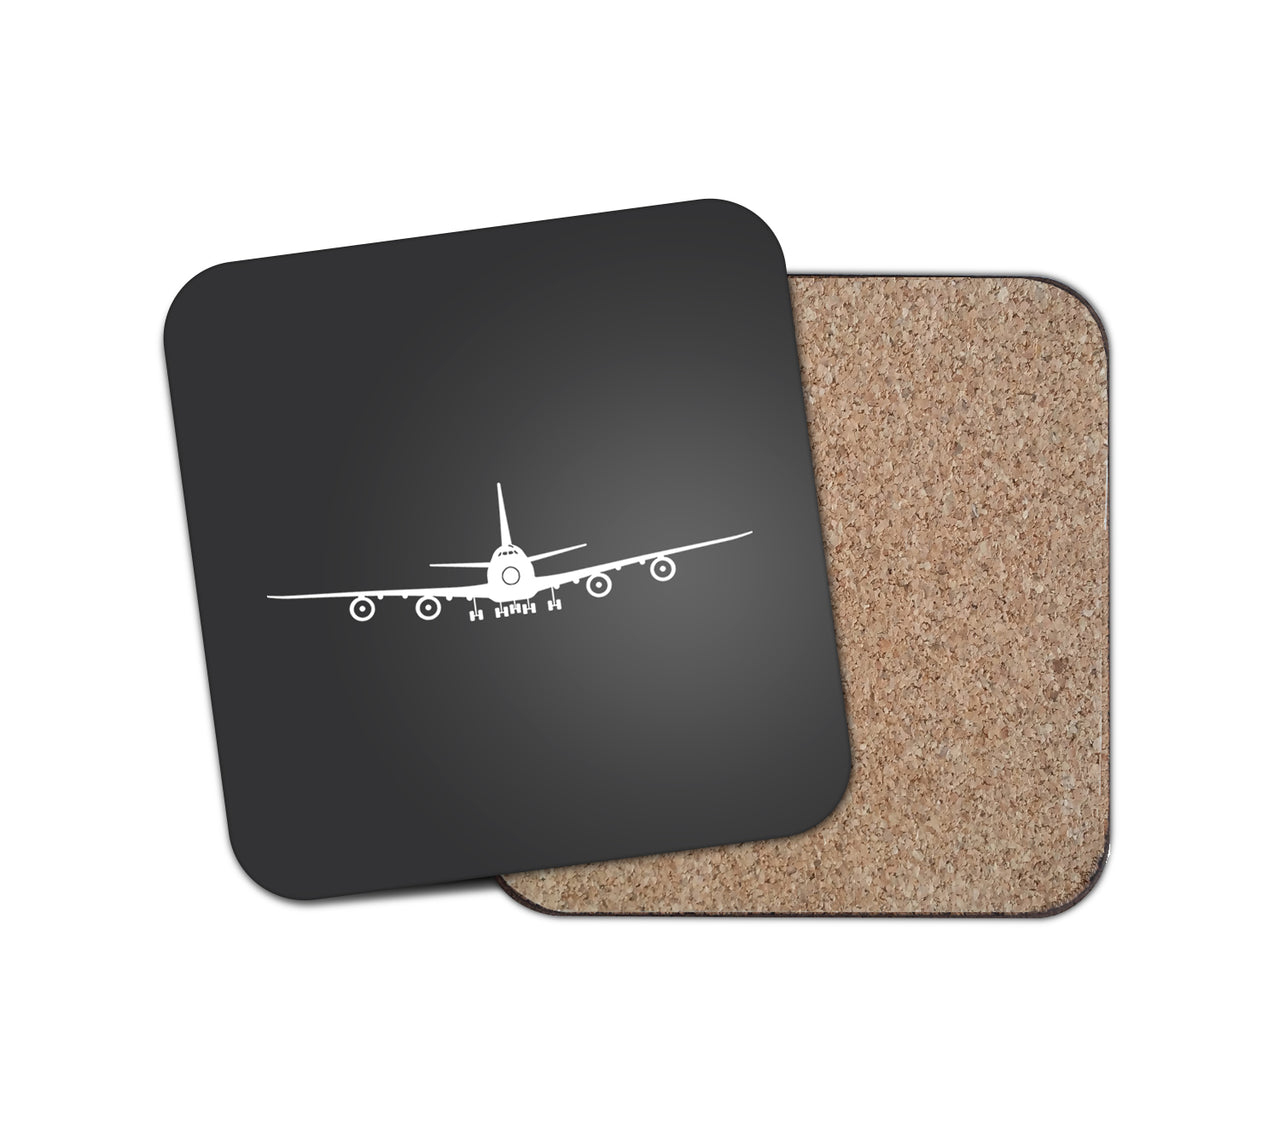 Boeing 747 Silhouette Designed Coasters